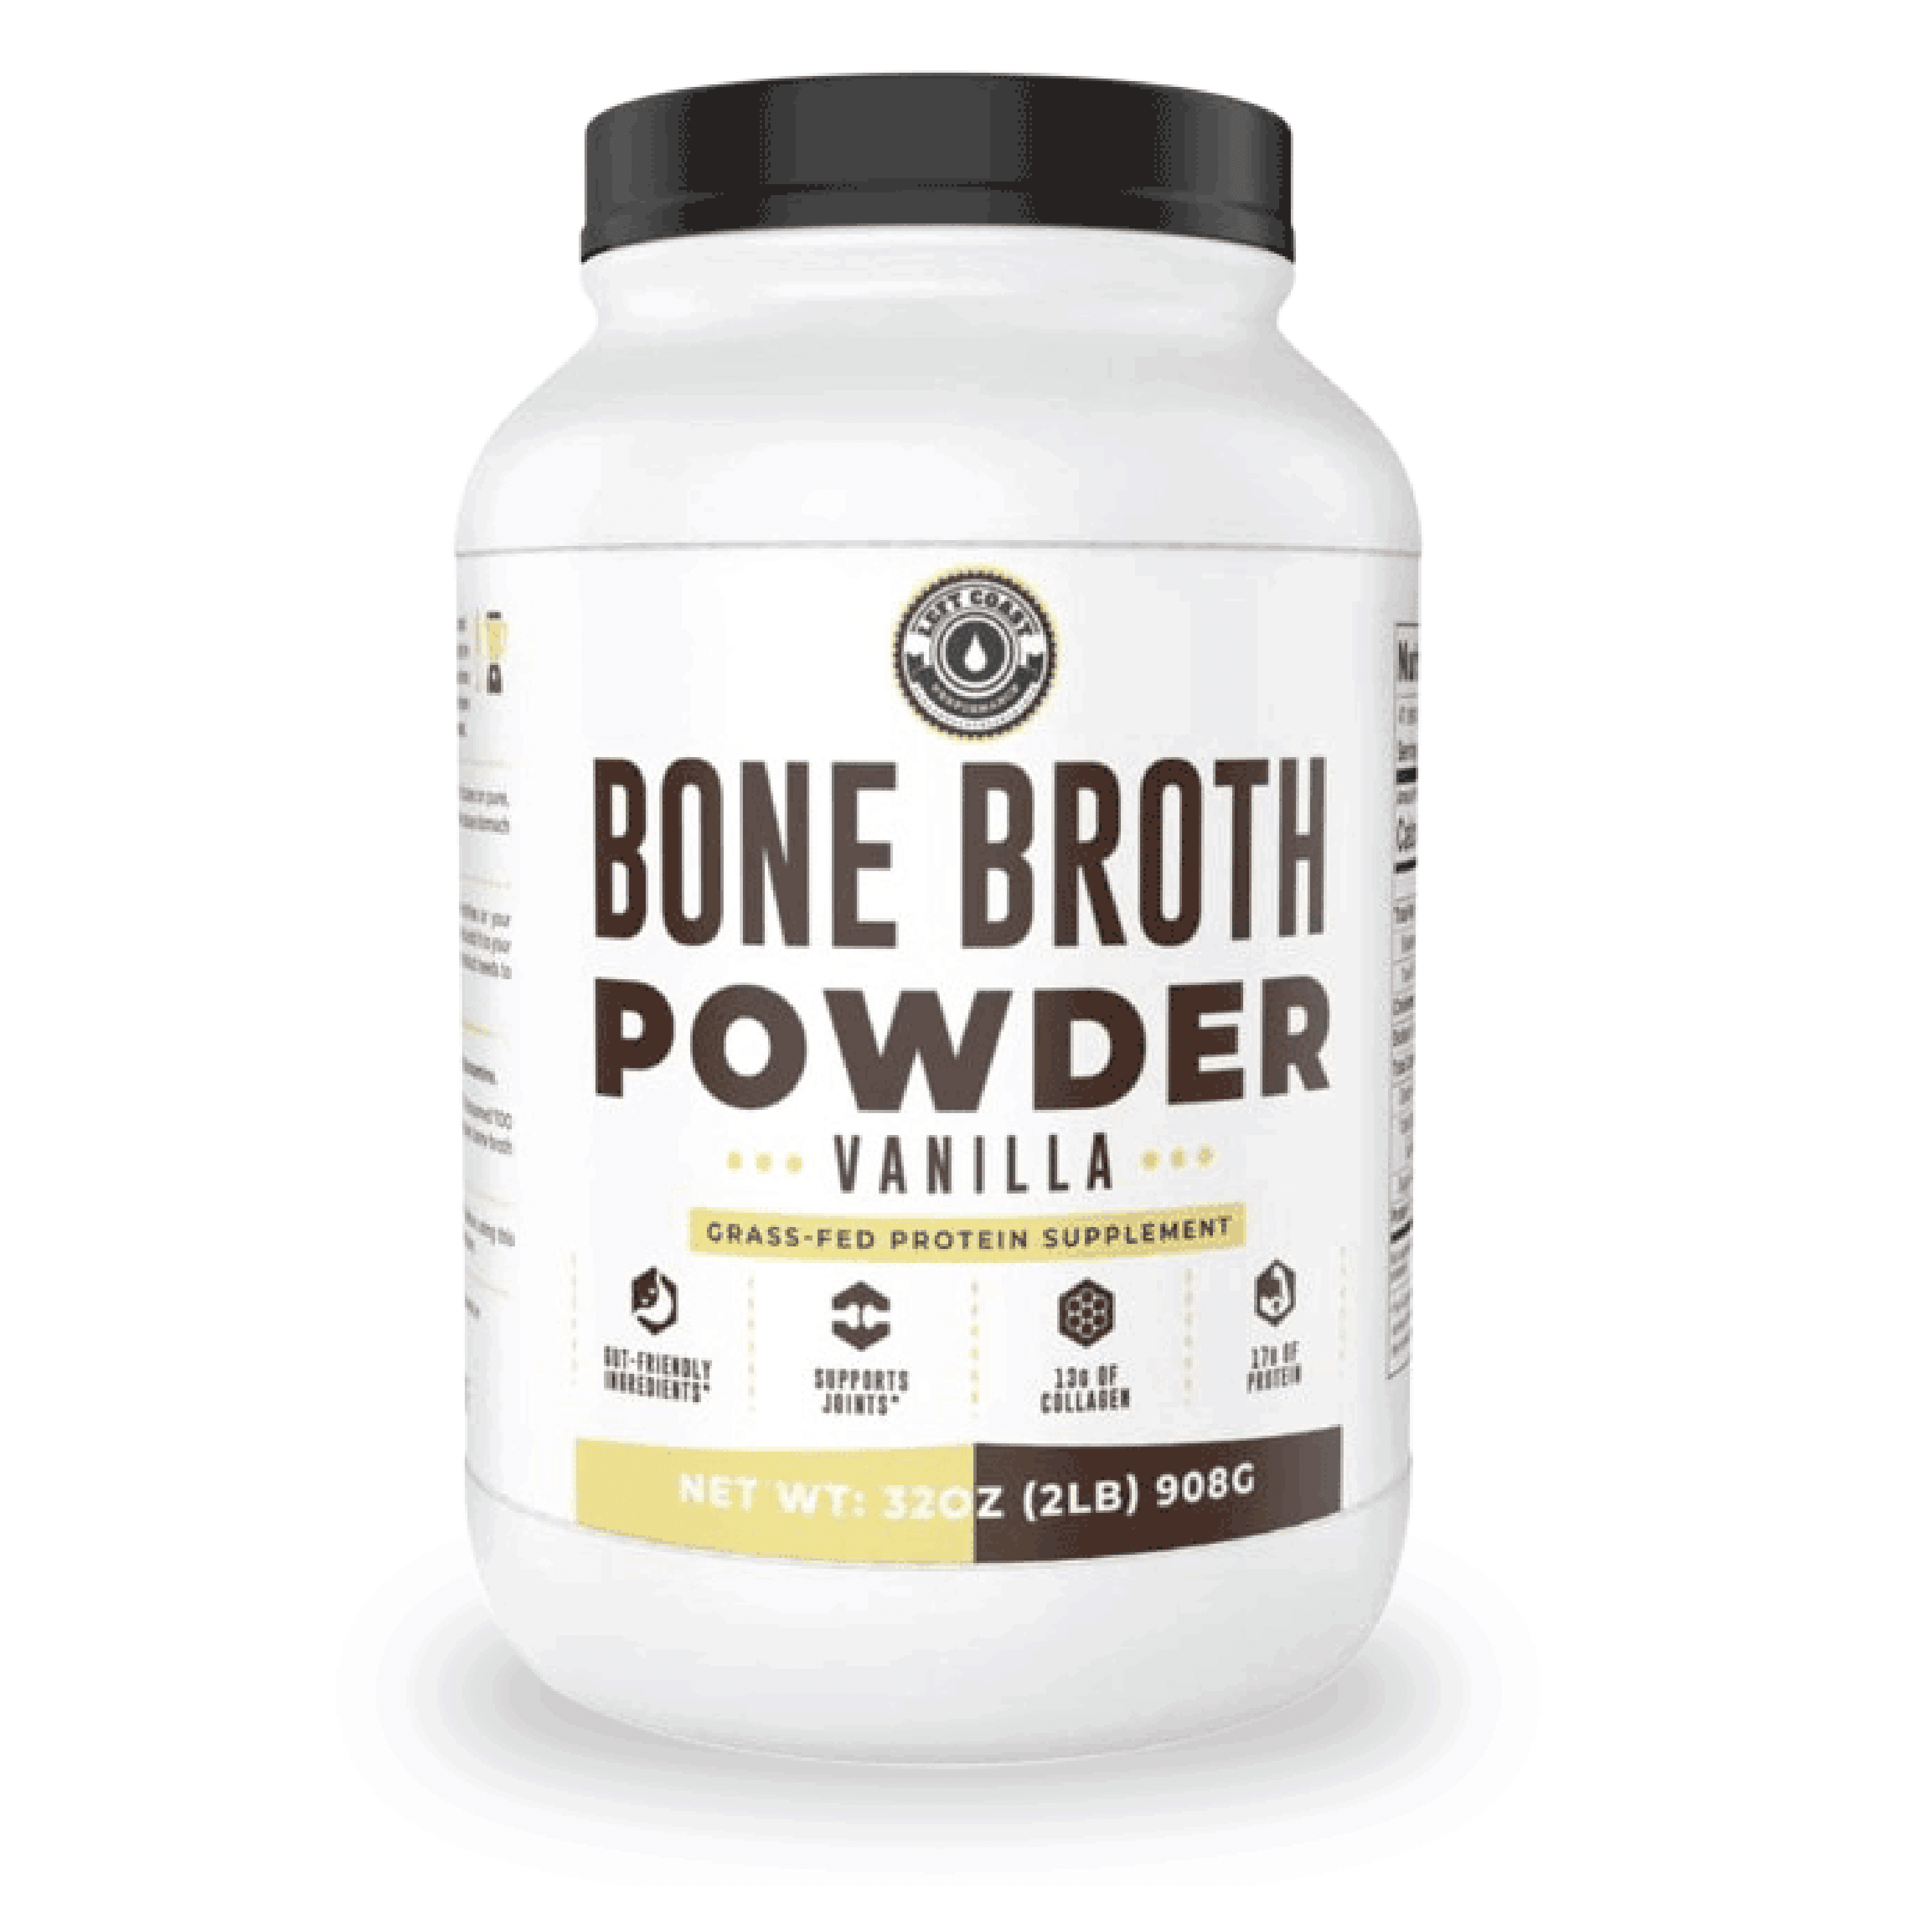 Beef Bone Broth Powder, 1.2 lbs (544 g) Bottle